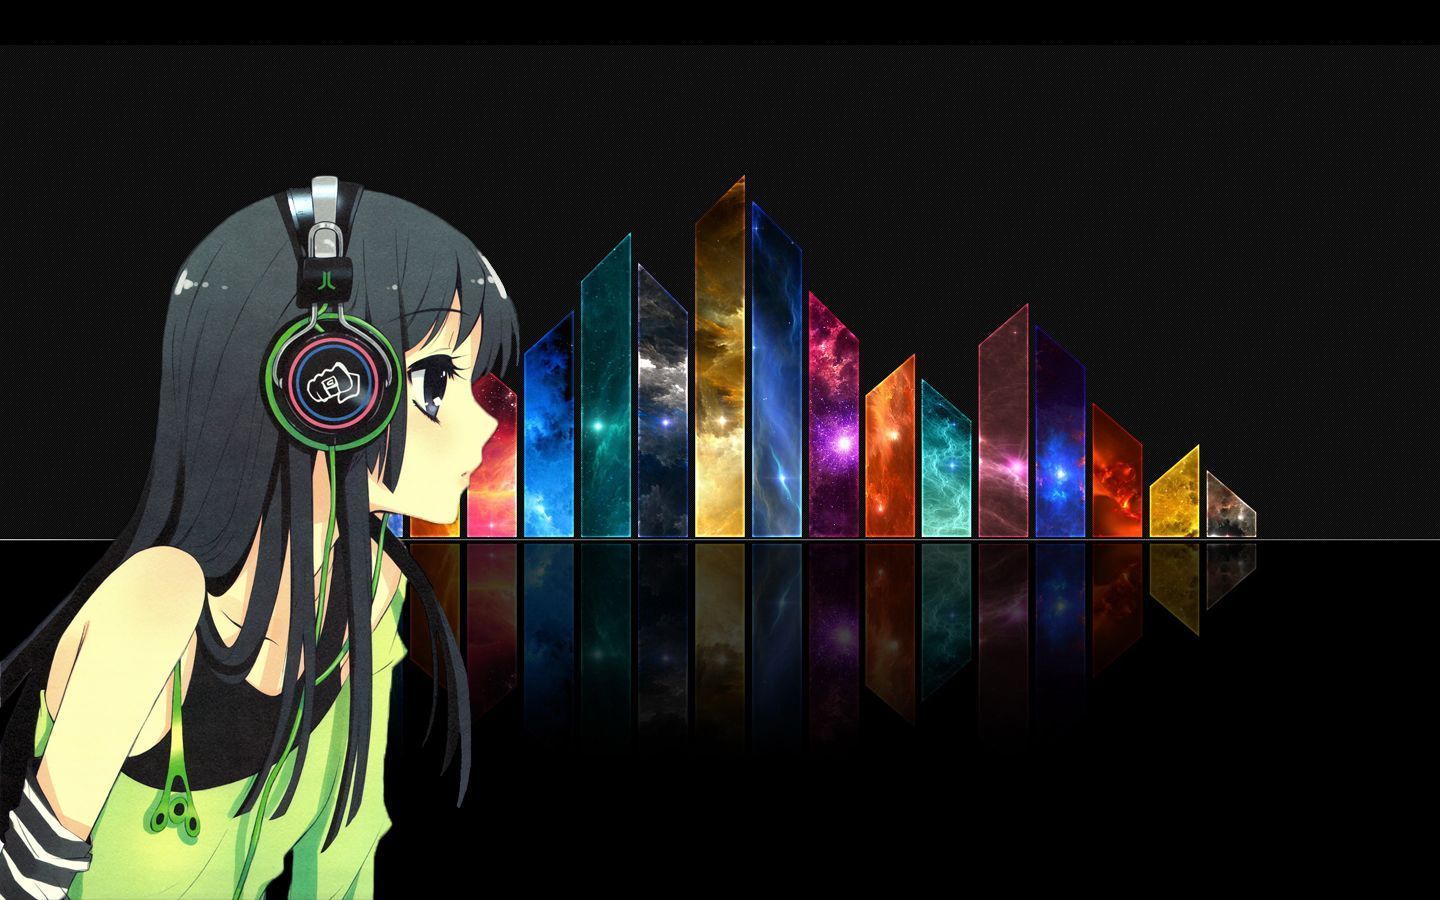 Anime Girls With Headphones Wallpaper | 1440x900 | ID:48144